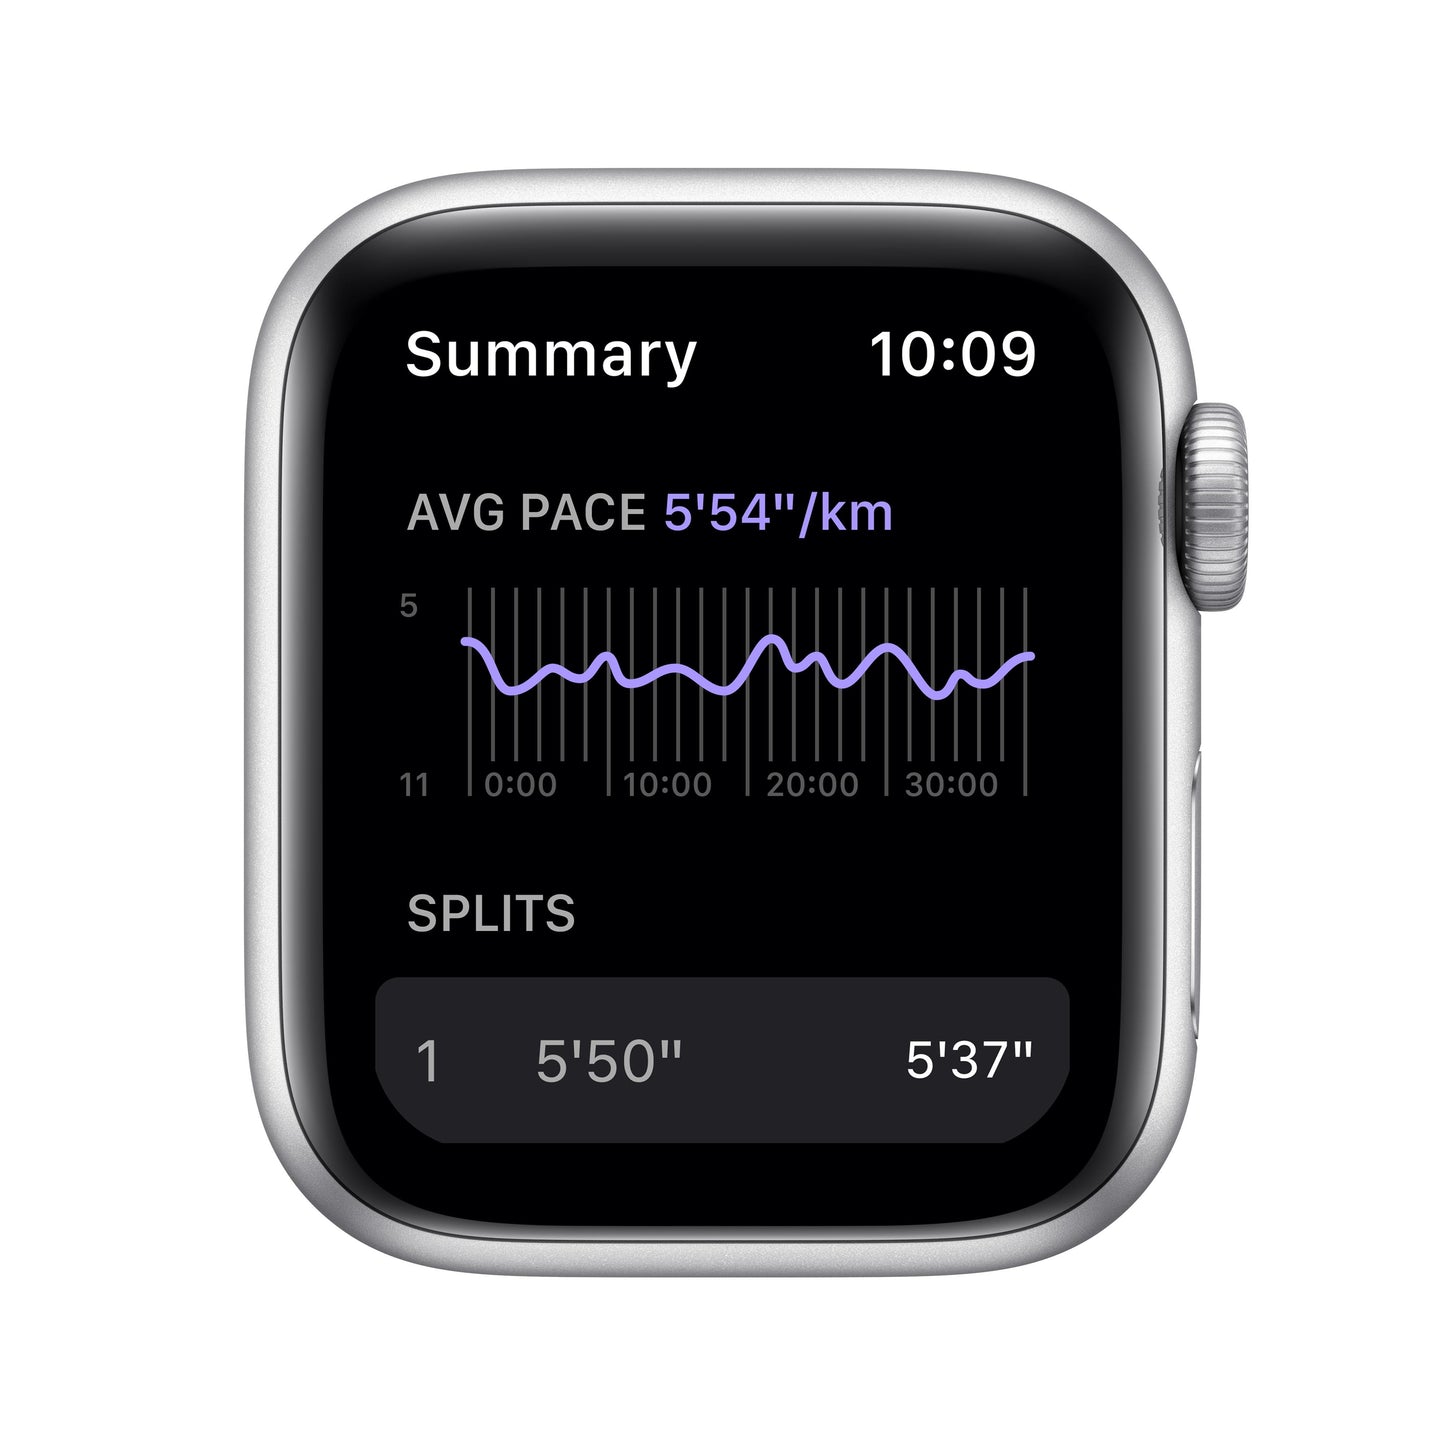 Apple Watch Nike SE GPS, 40mm Silver Aluminum Case with Pure Platinum/Black Nike Sport Band - Regular